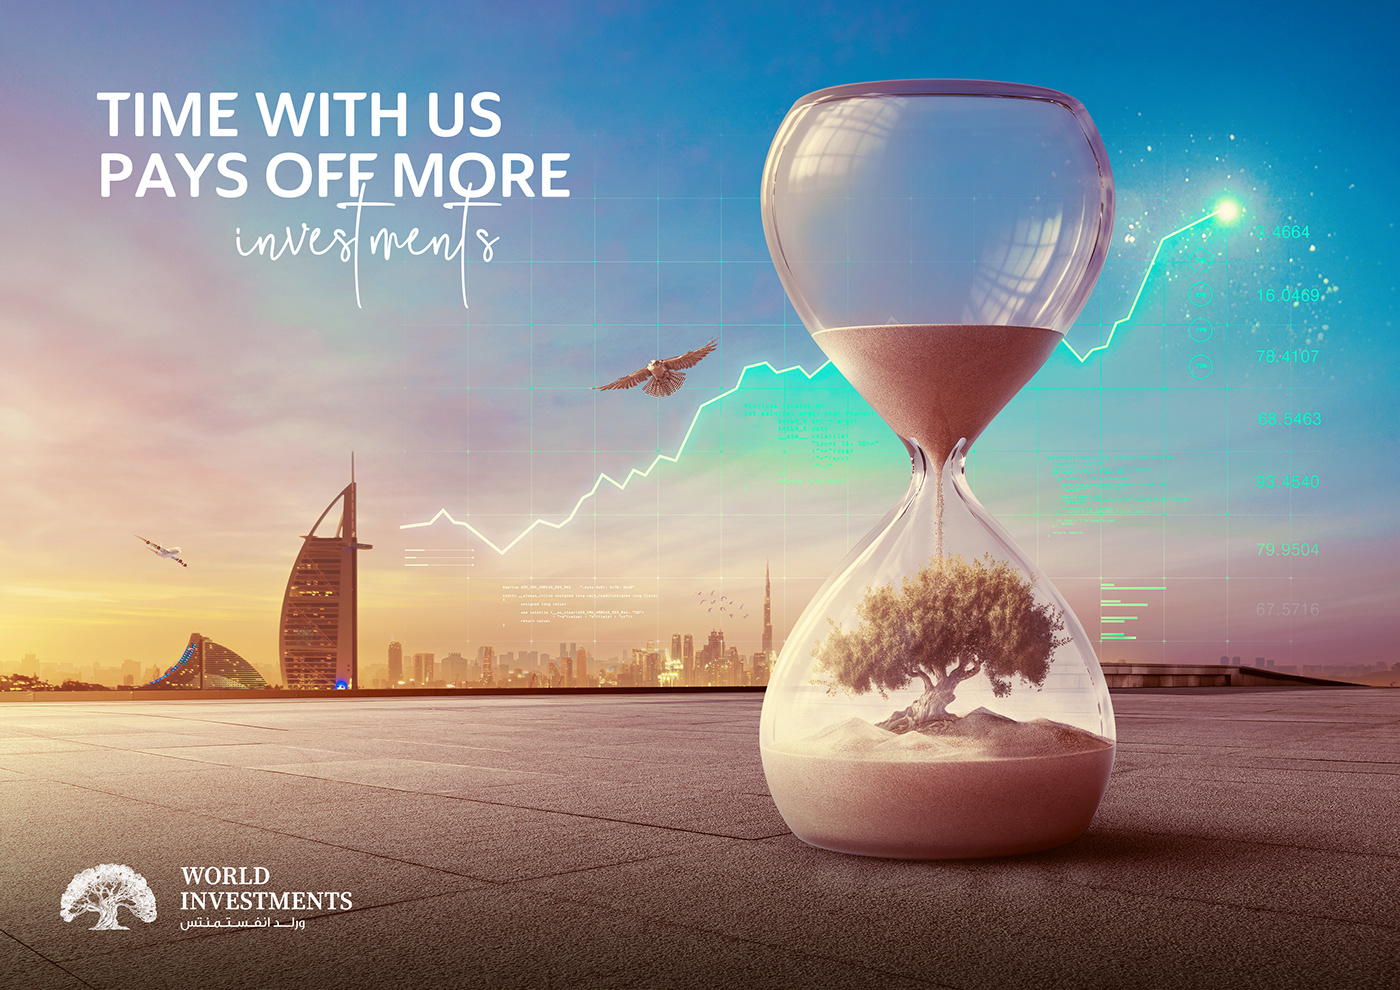 Investments visual Advertising  emirates dubai Abu Dhabi DiaBx financialservices InvestmentServices UAE